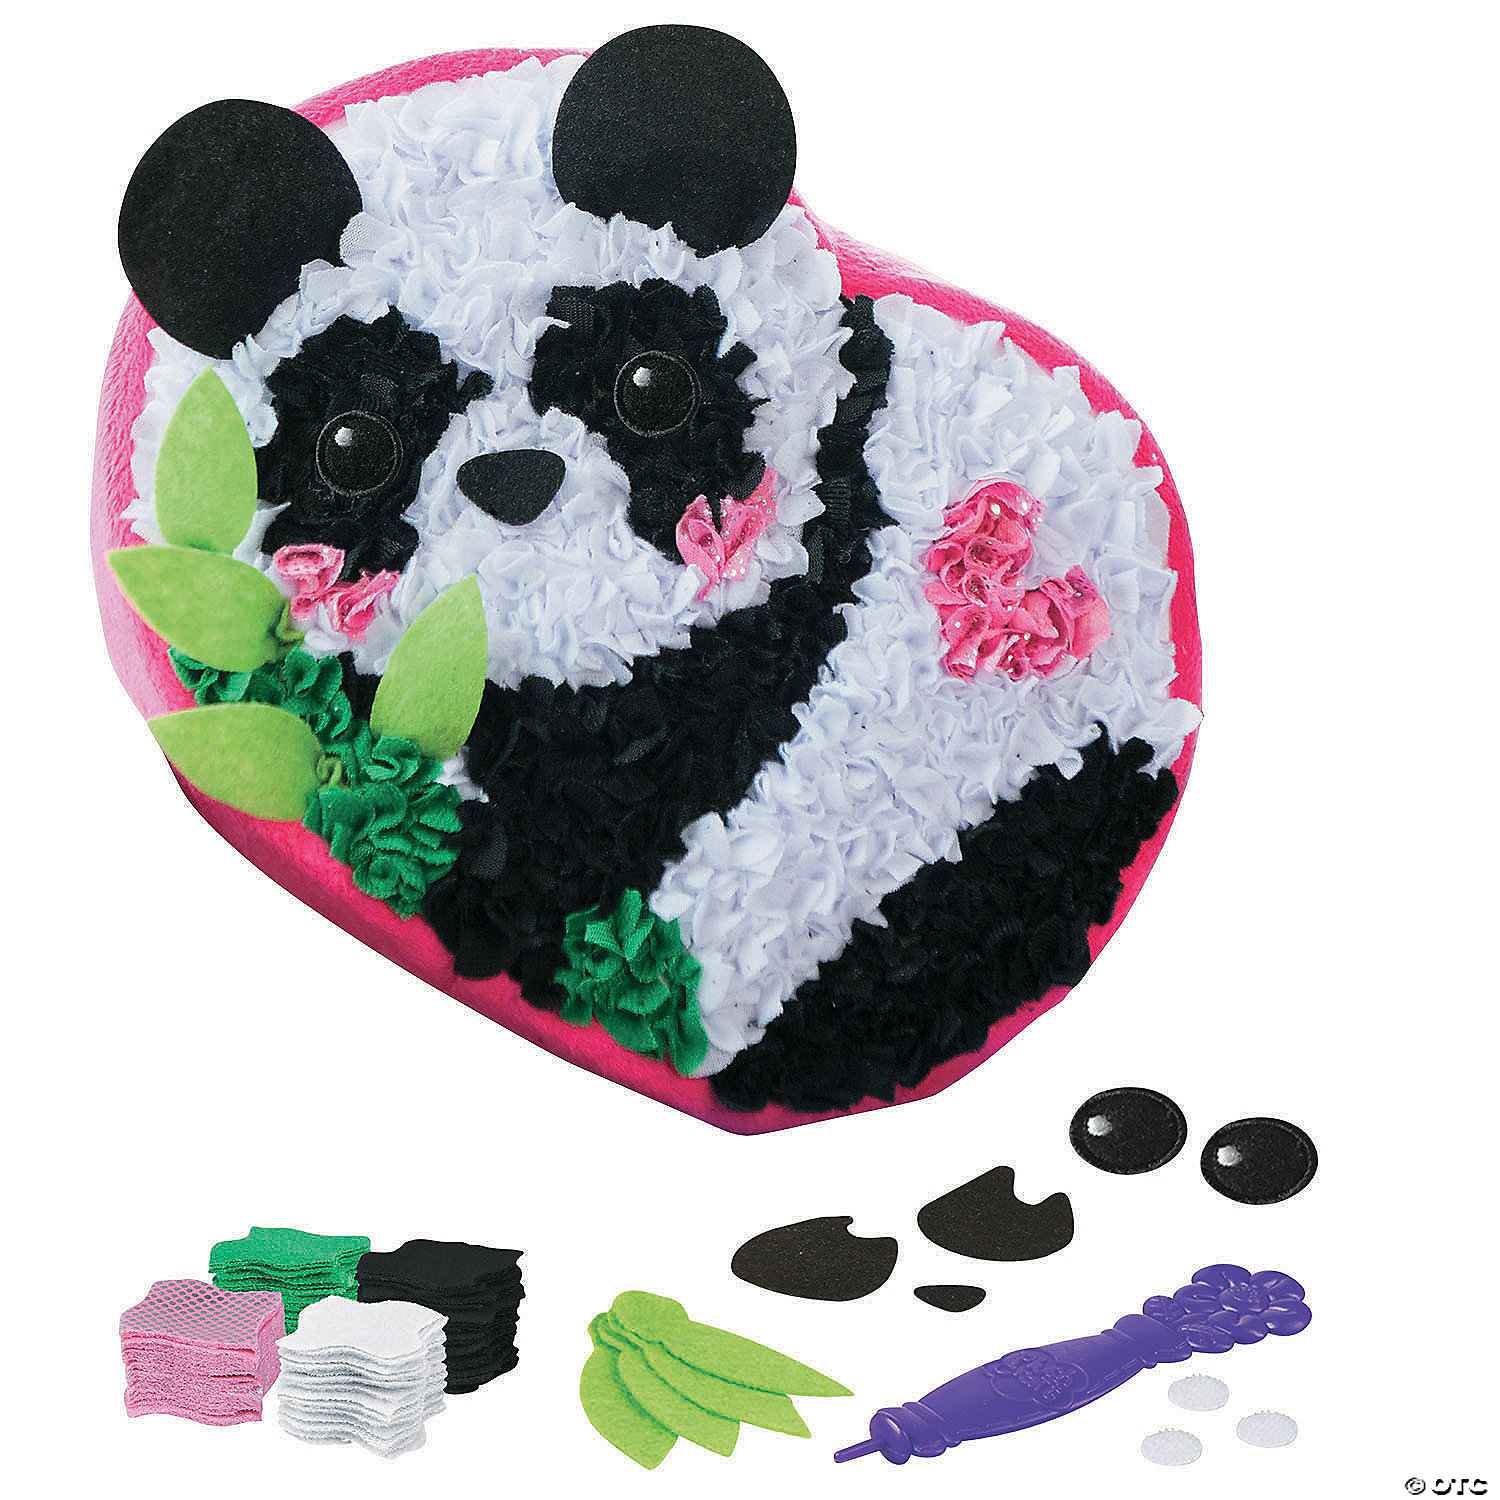 plush craft panda